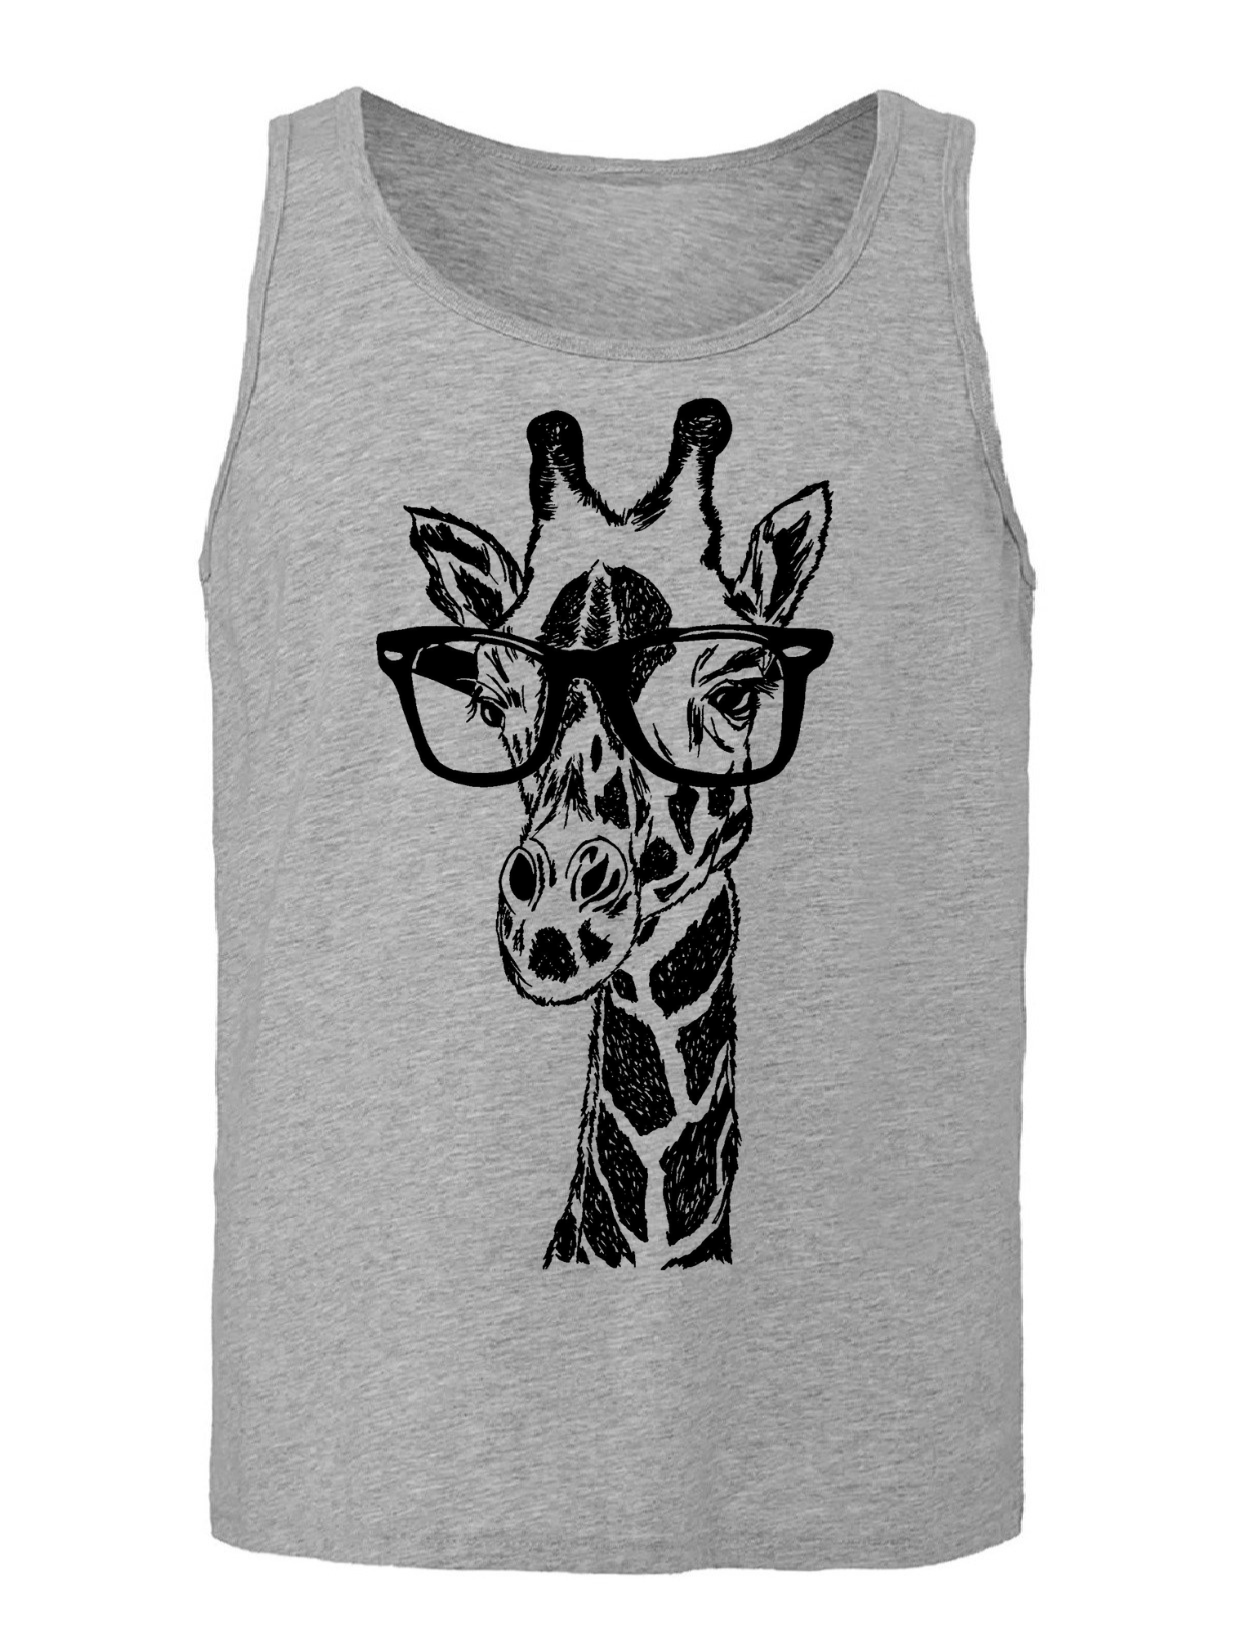 Giraffe Wearing Glasses Unisex Tank Top